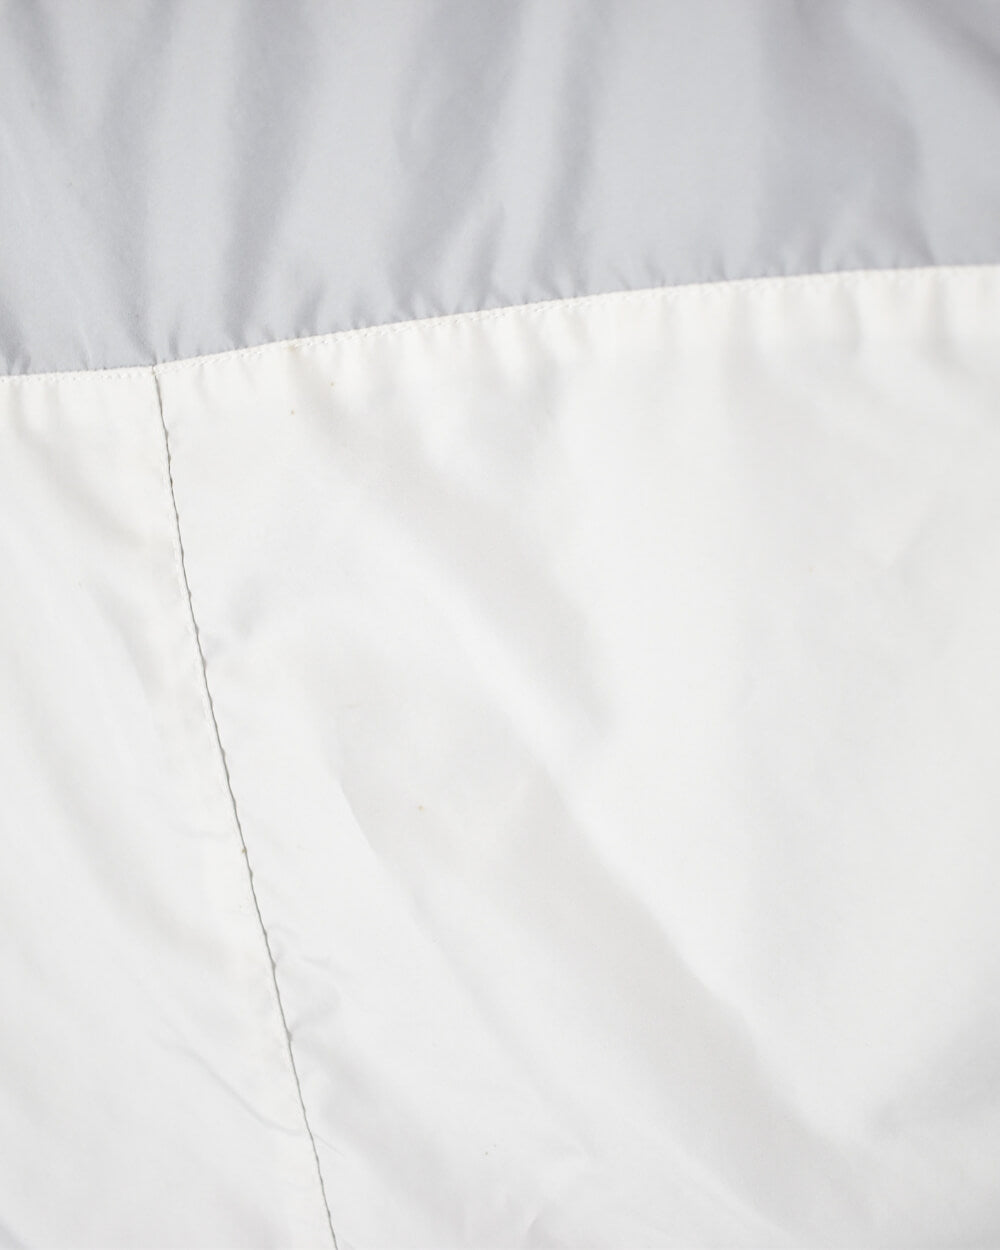 White Nike ACG Women's Fleece Lined Gilet - Large